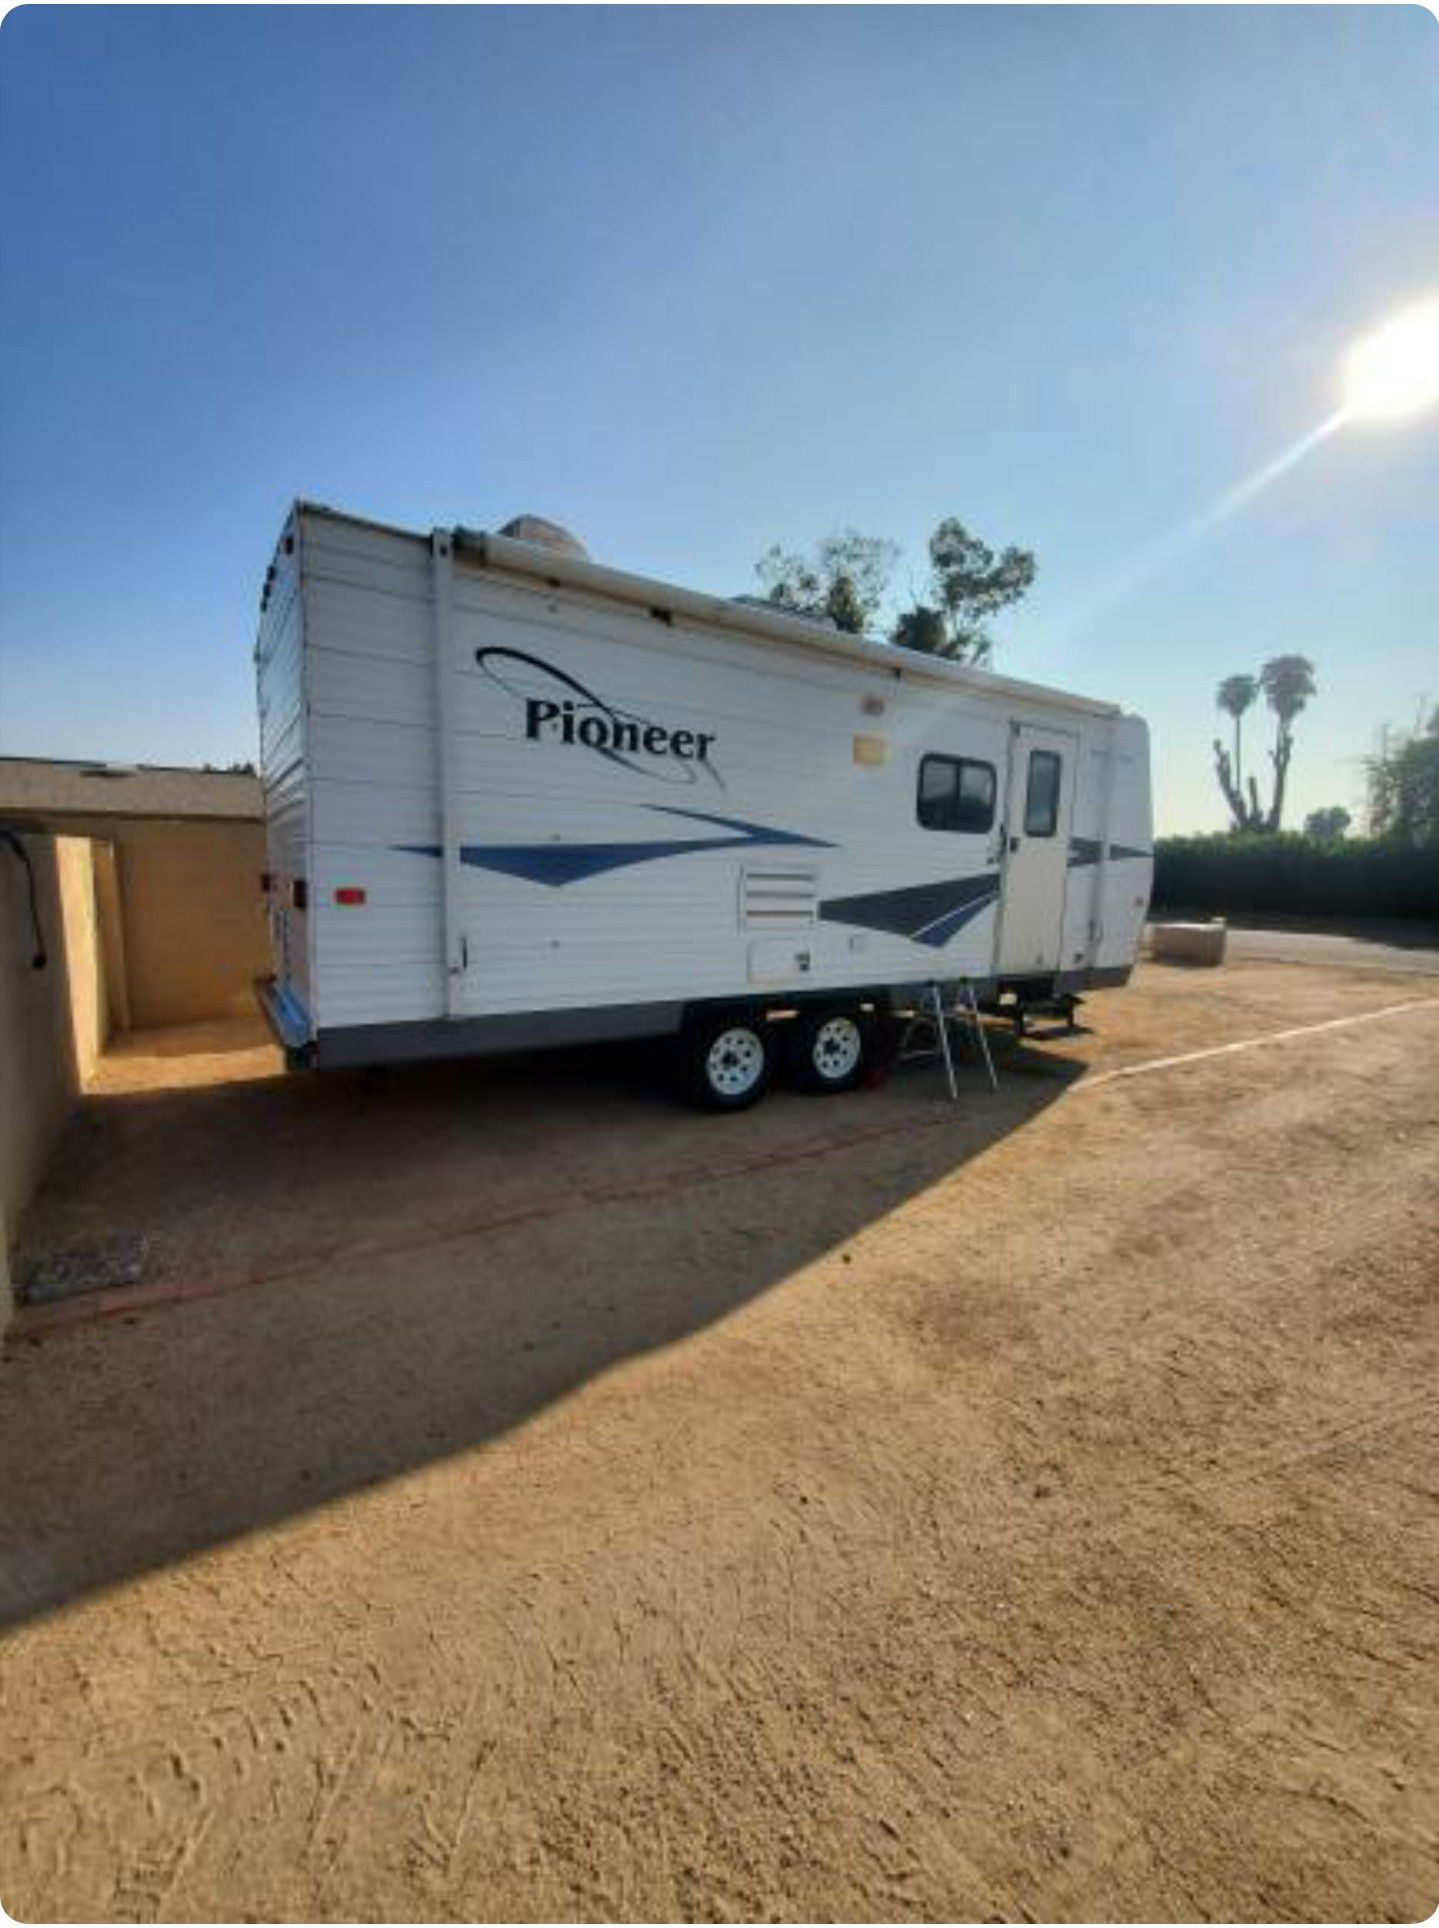 2006 Pioneer travel trailer